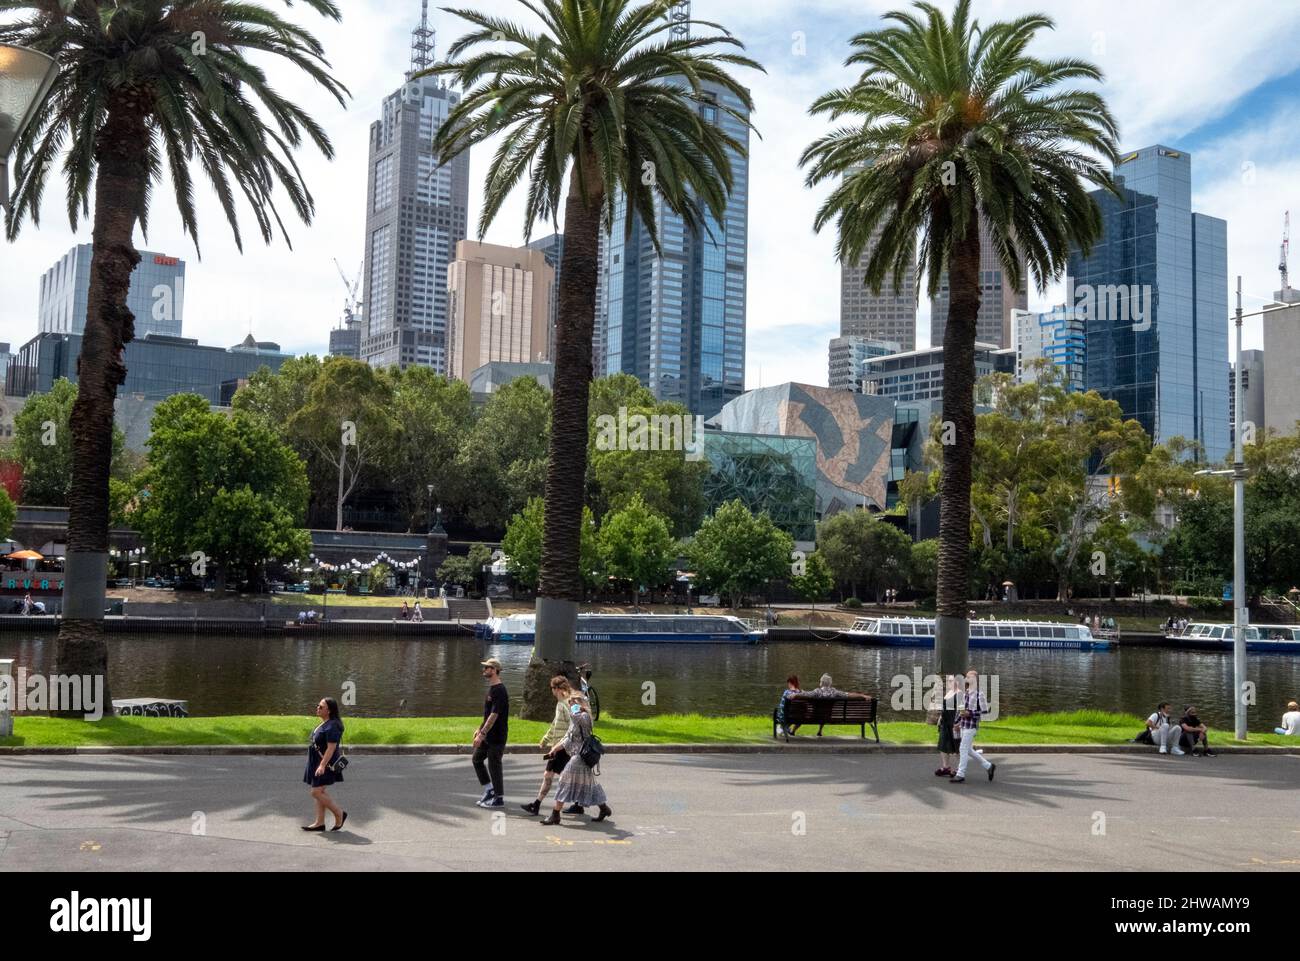 Yarra river in front of the Melbourne skyline. Melbourne, Victoria, Australia Stock Photo